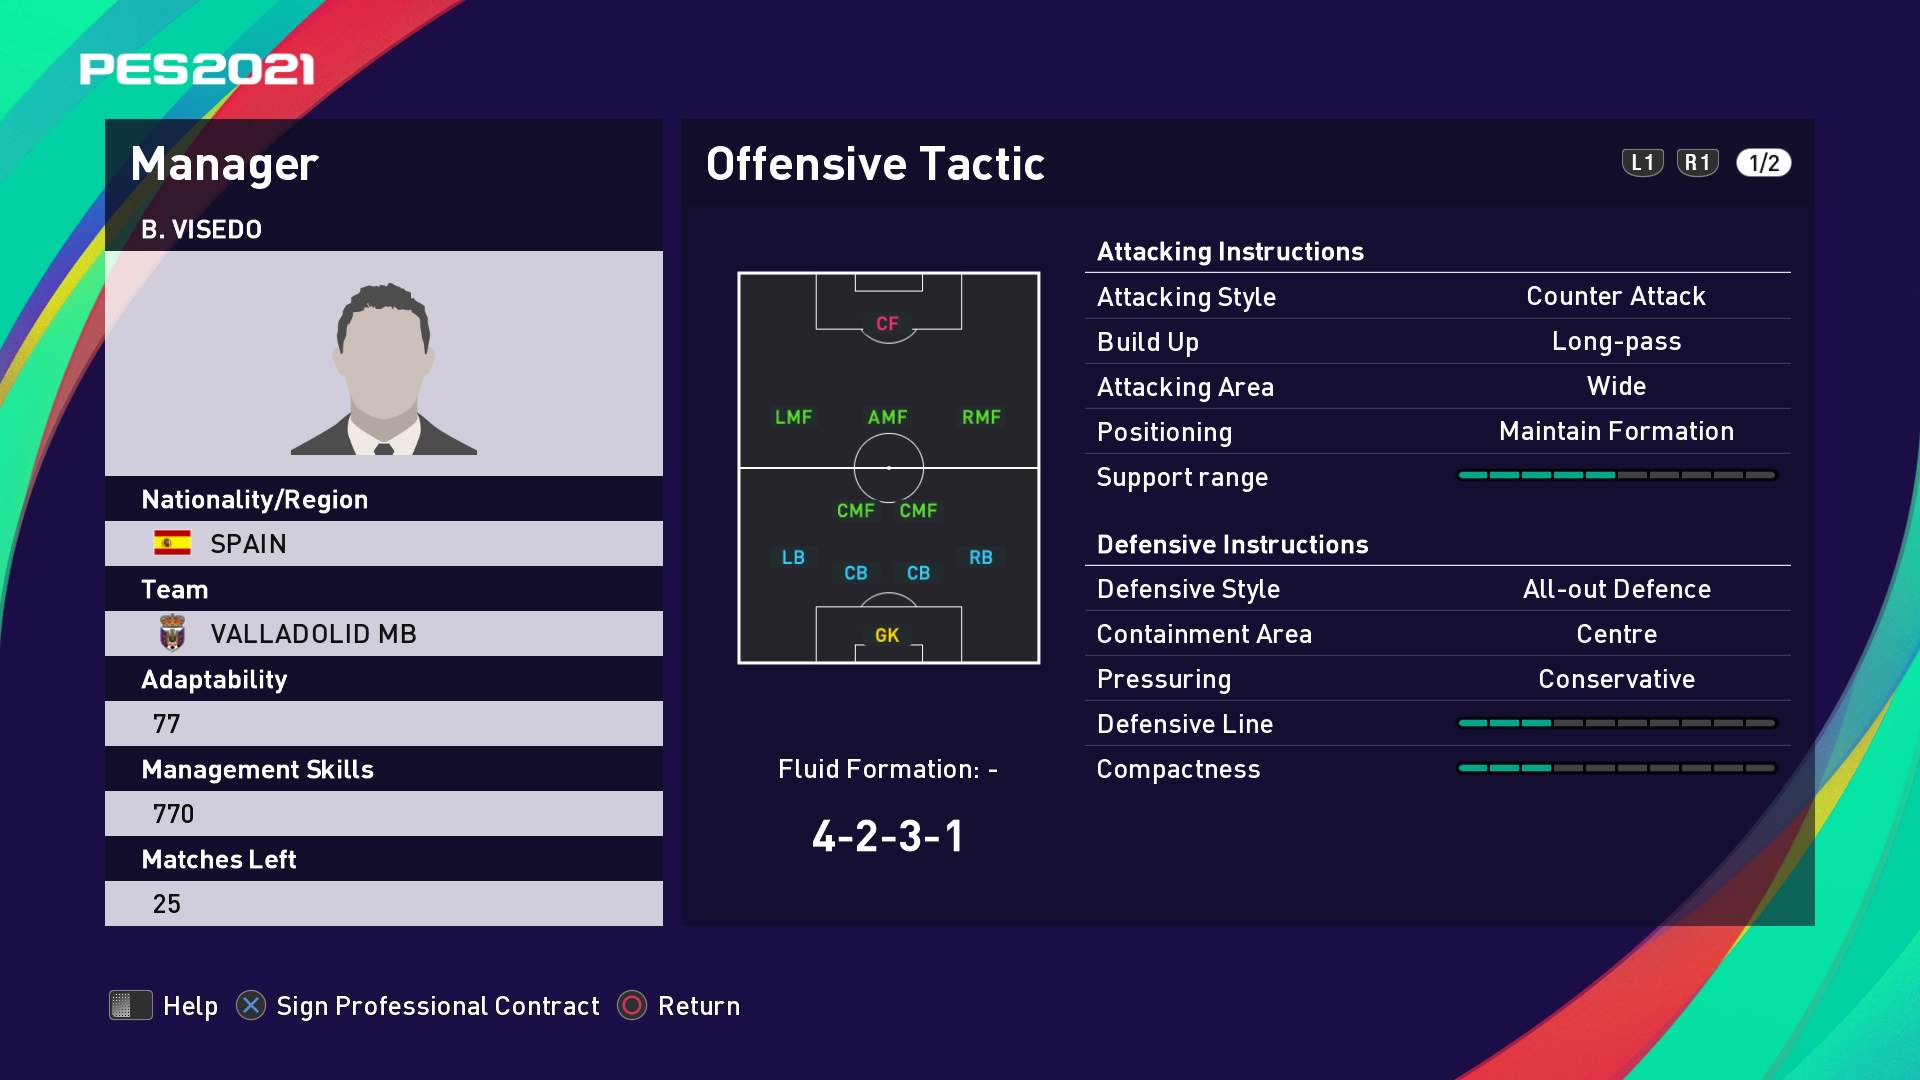 B. Visedo (Sergio Soriano) Offensive Tactic in PES 2021 myClub